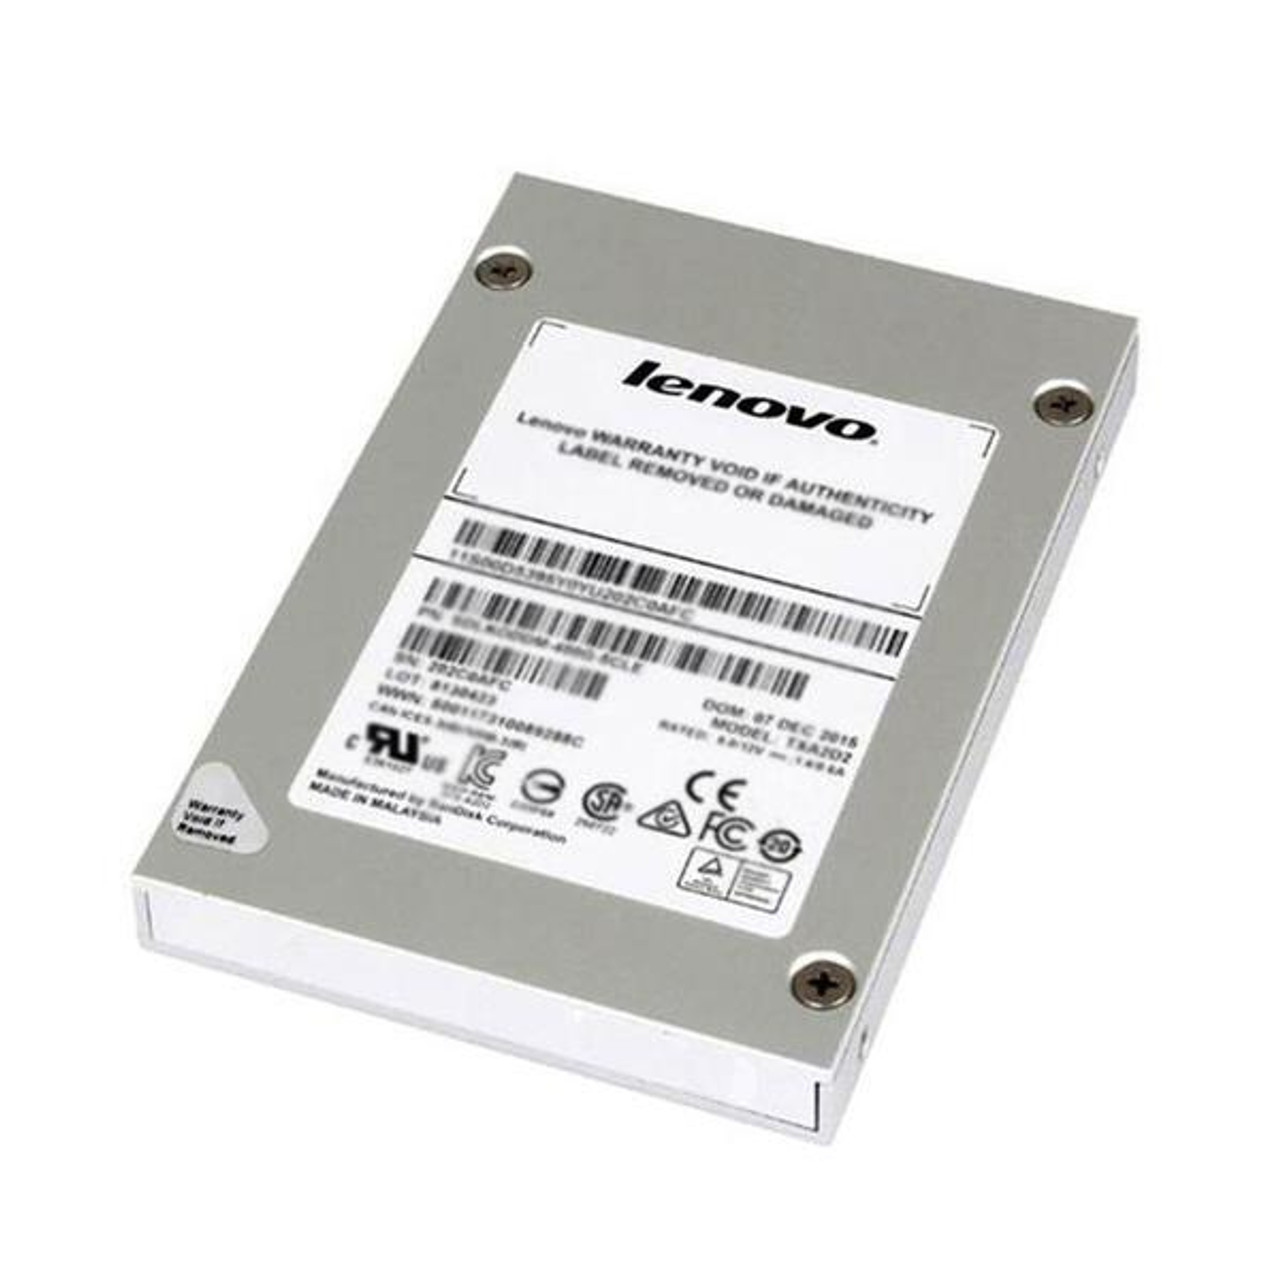 Lenovo 480GB 2.5-inch Internal Solid State Drive (SSD)